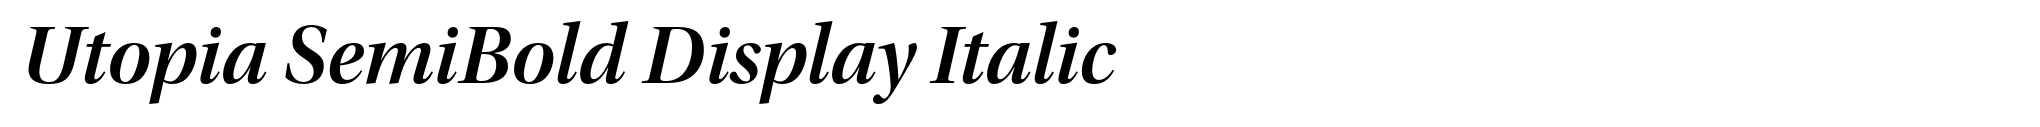 Utopia SemiBold Display Italic image